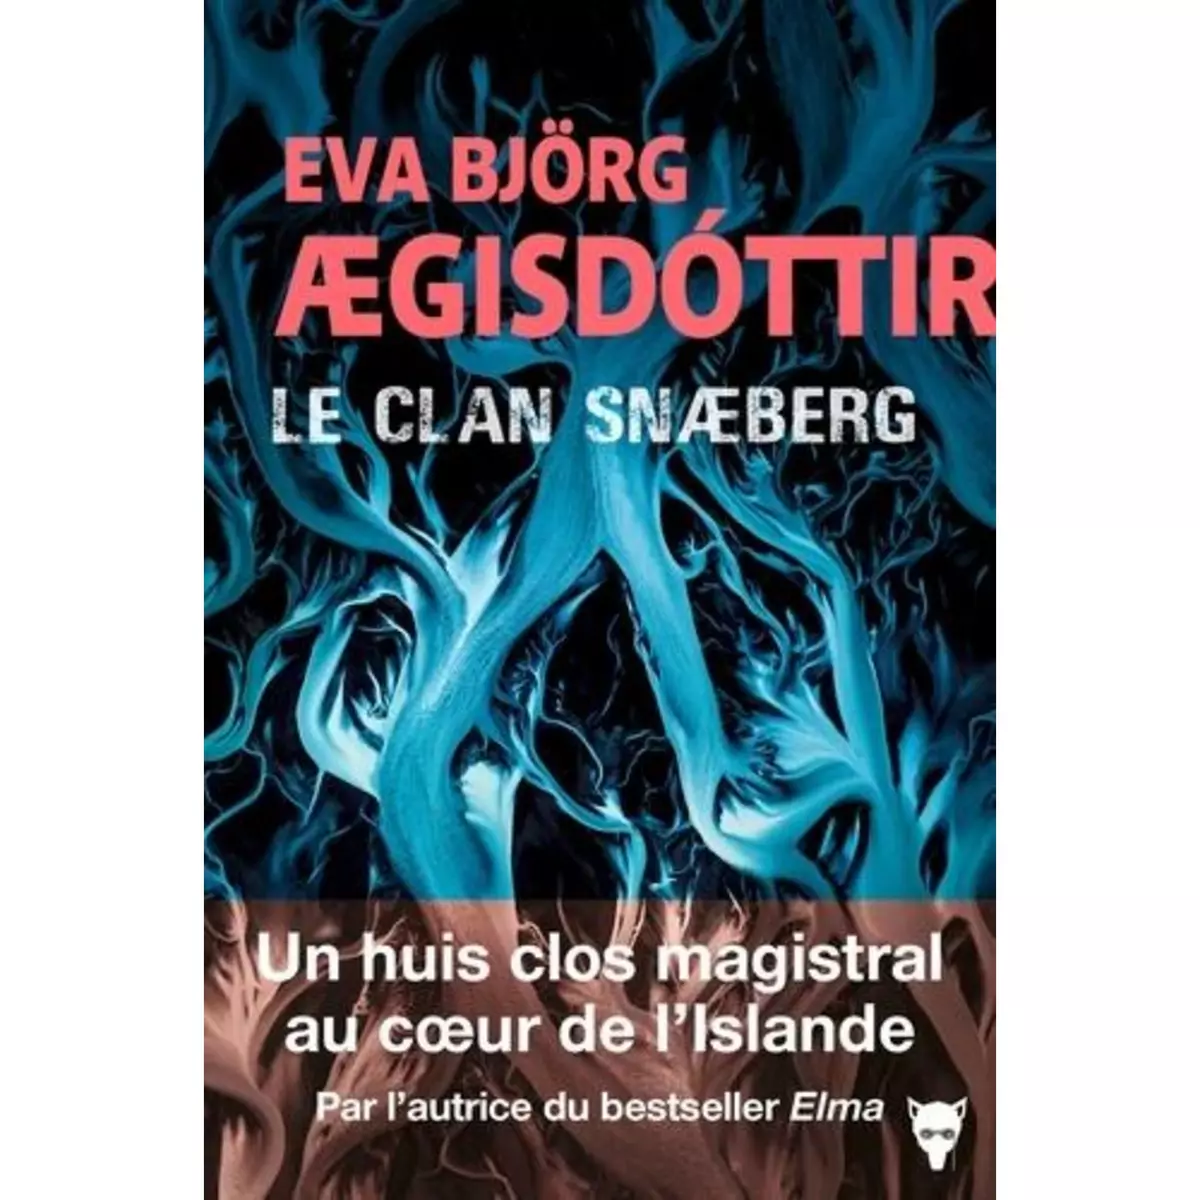  LE CLAN SNAEBERG, Aegisdottir Eva Björg